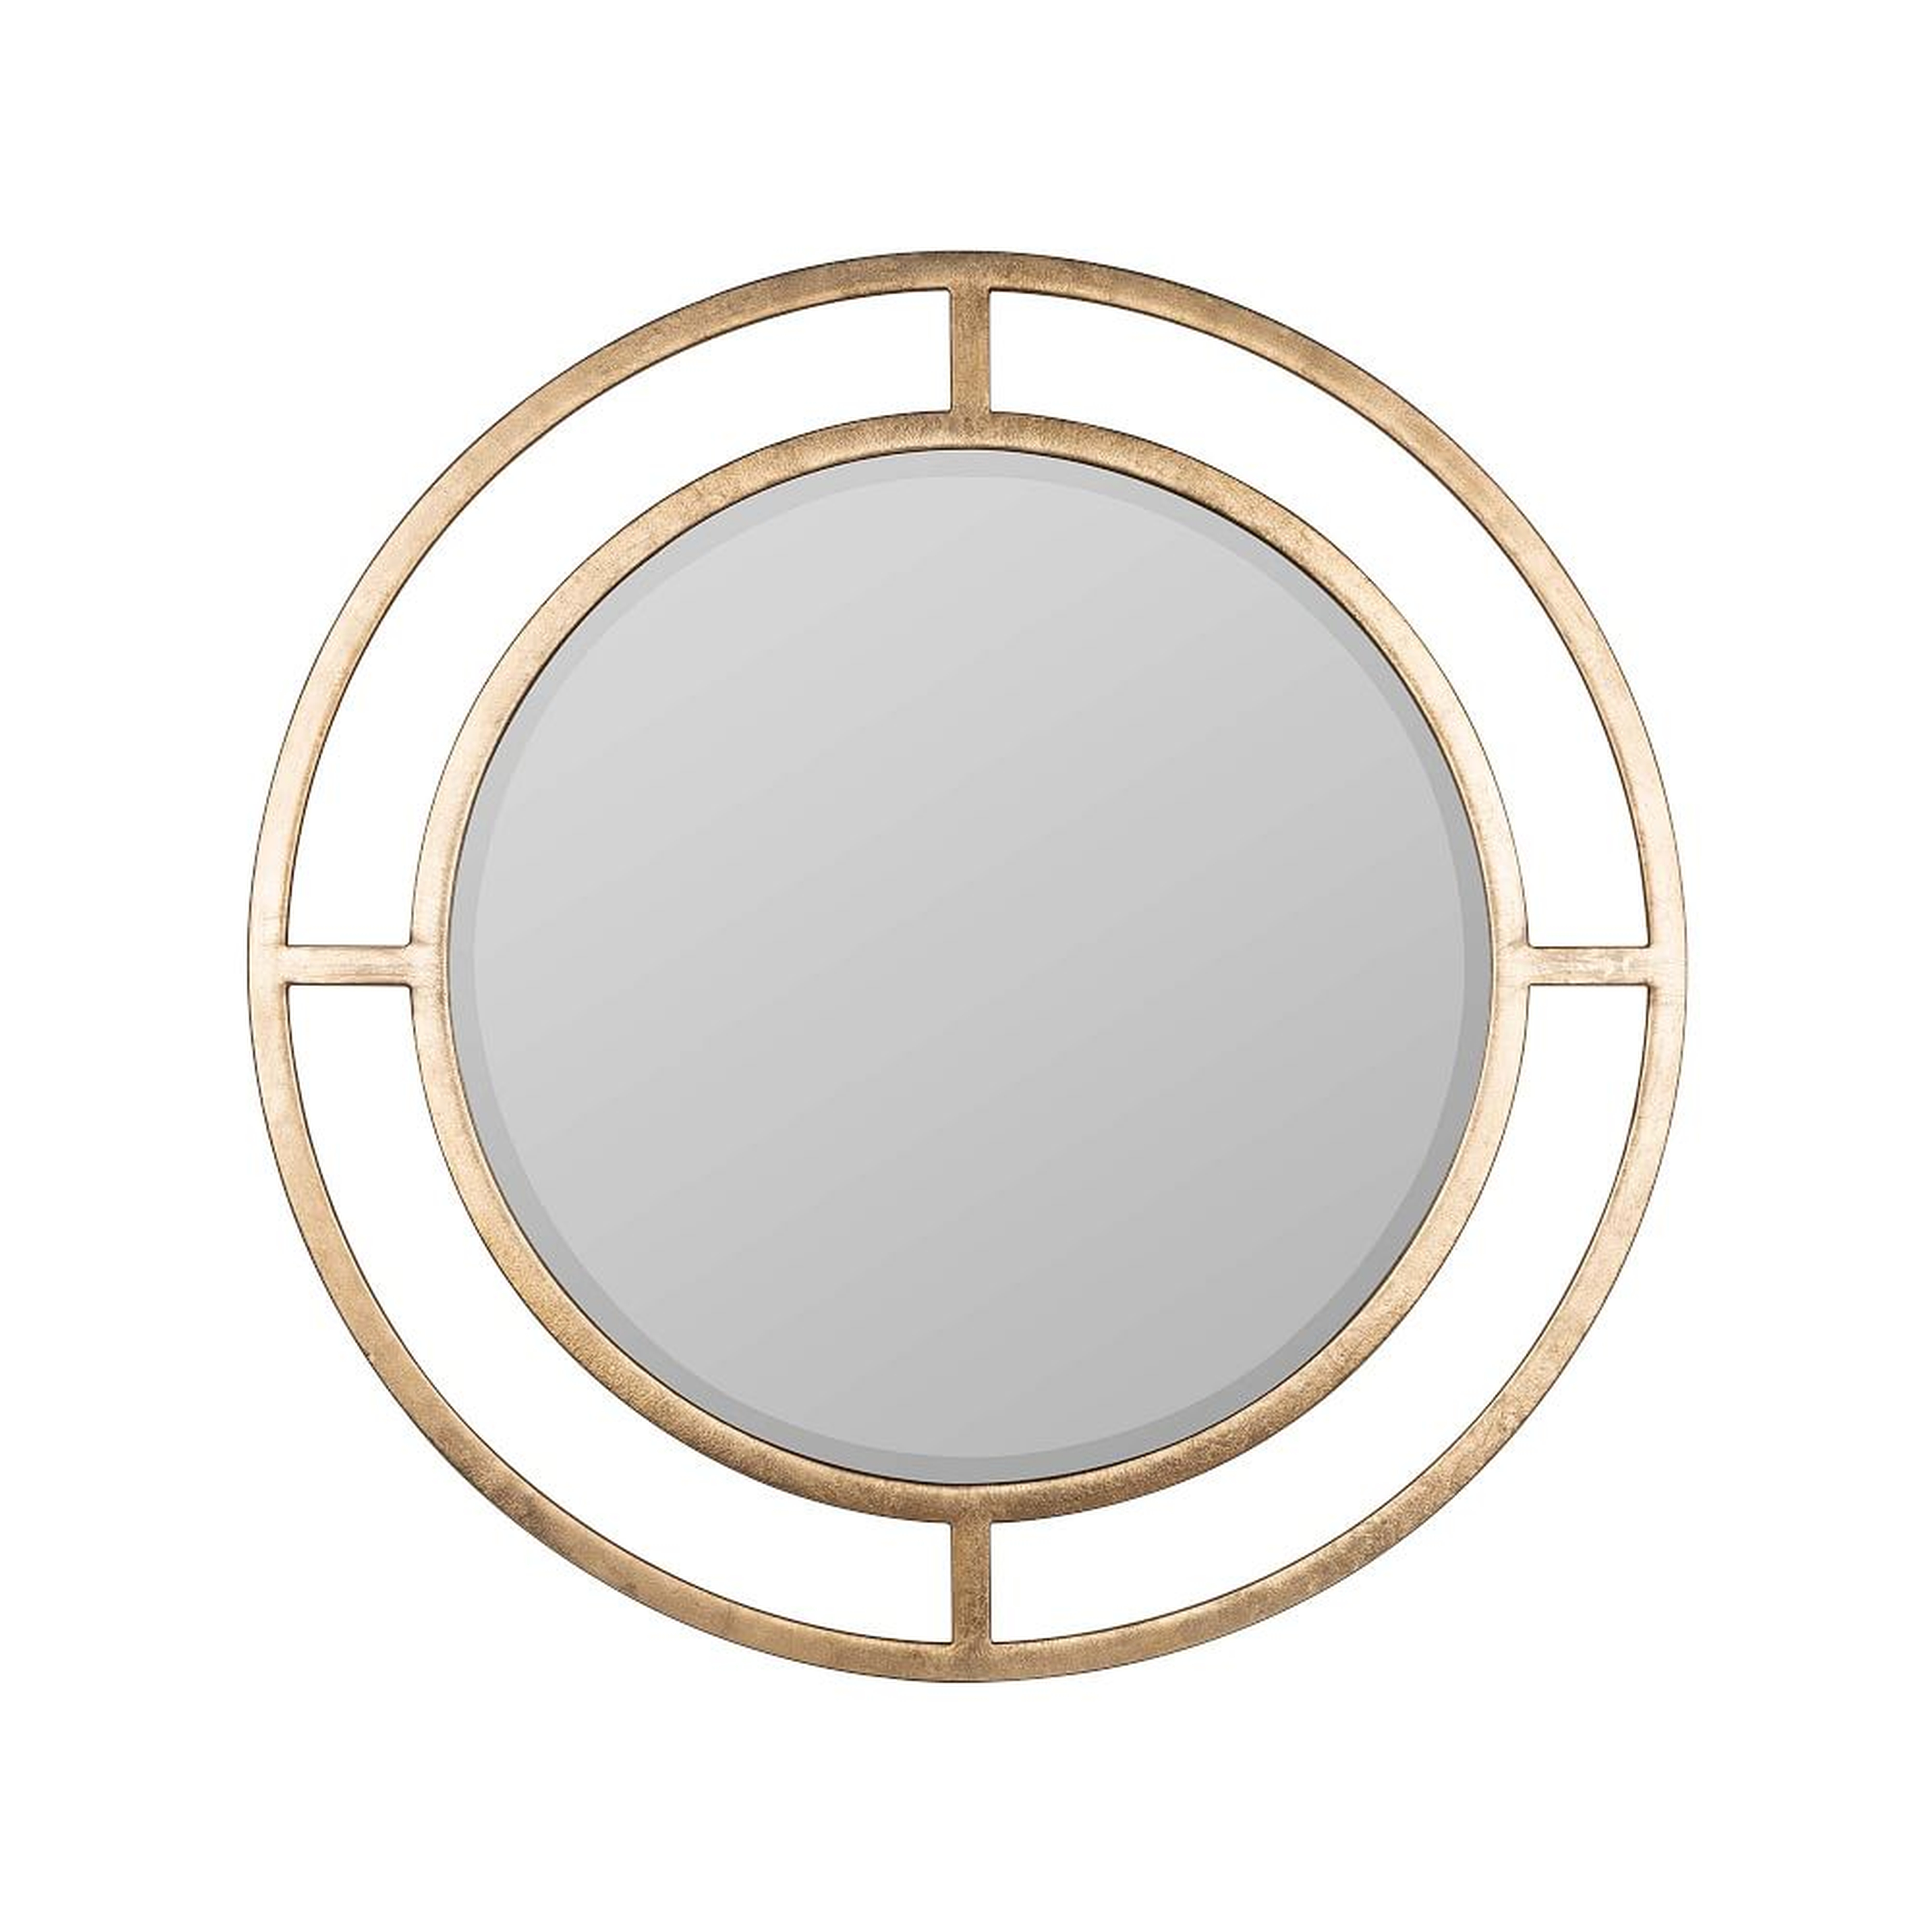 Averie Wall Mirror, Gold - West Elm